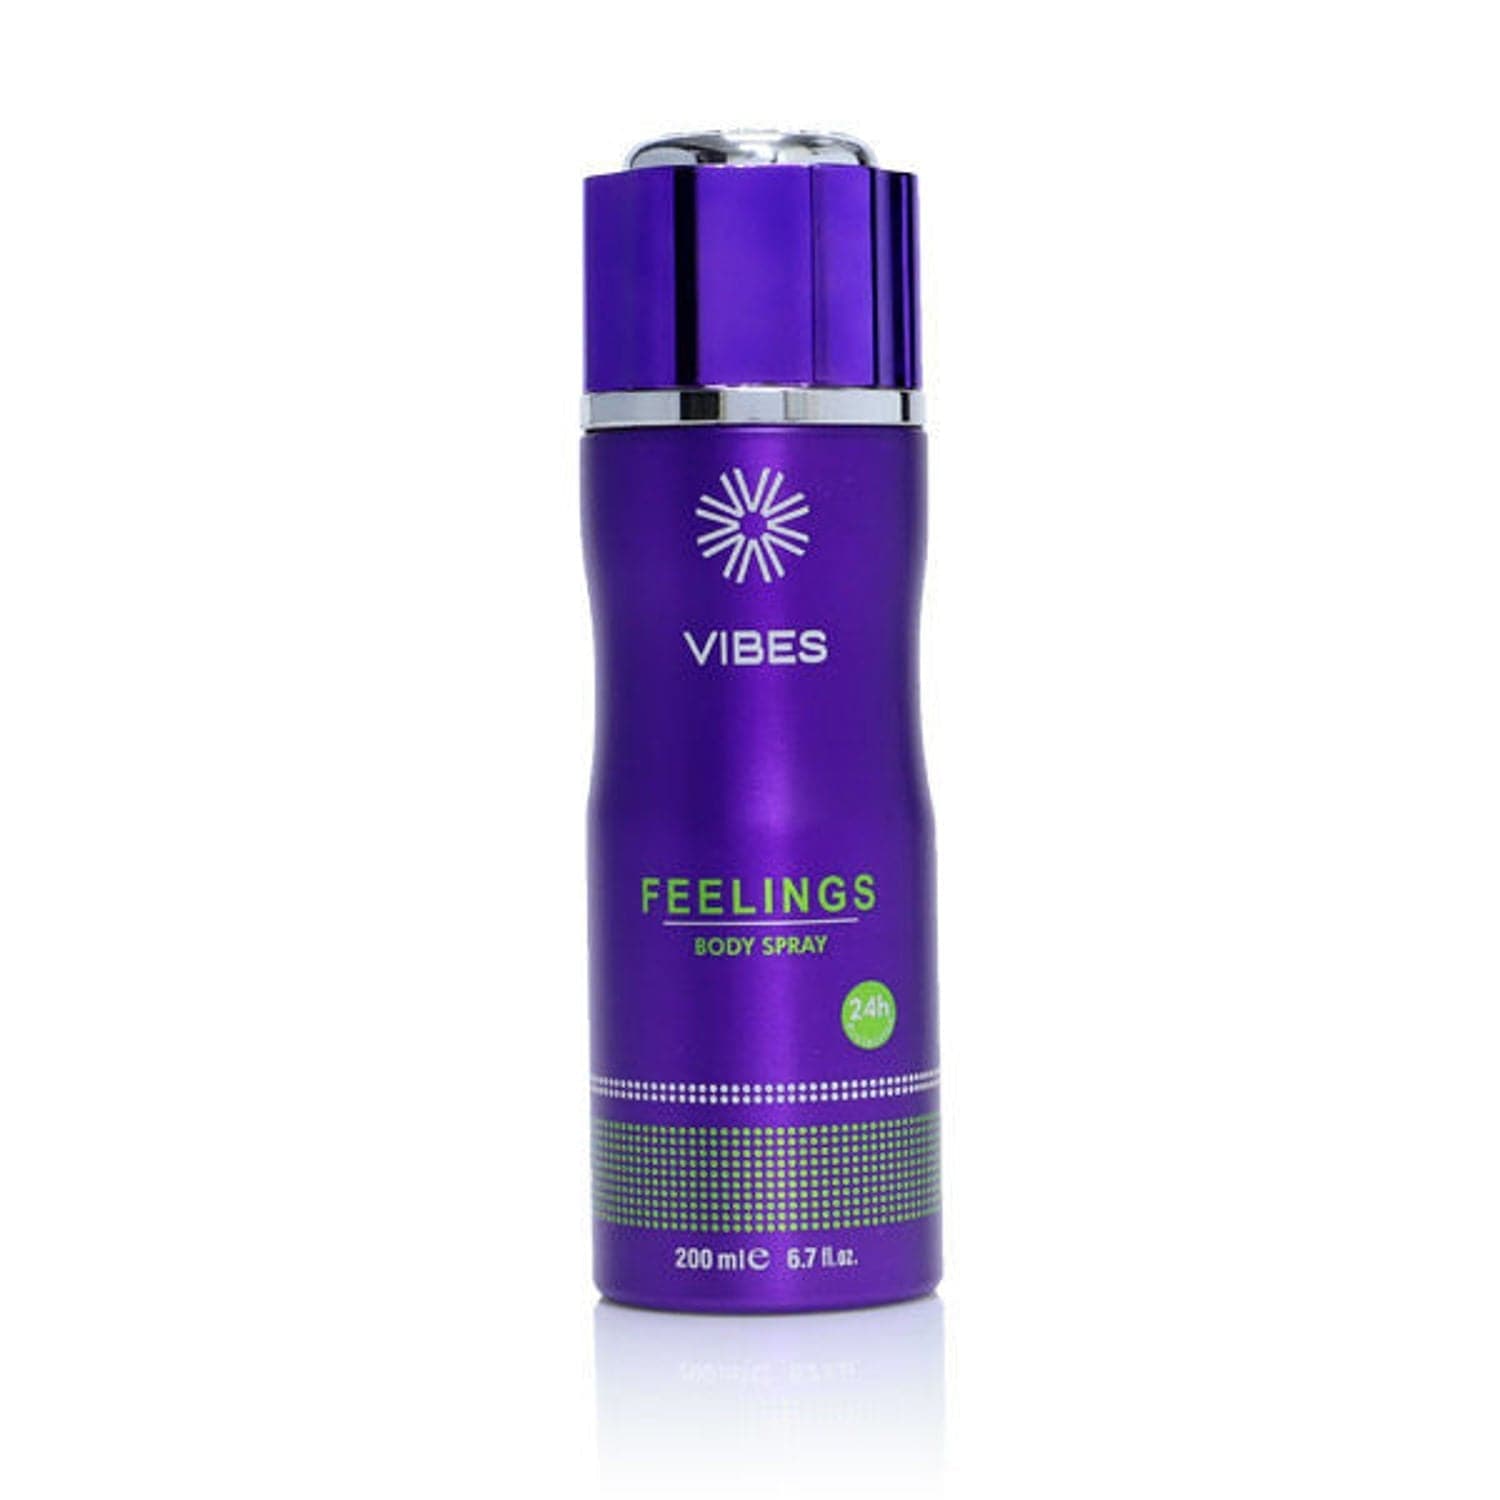 Hemani Vibes Body Spray - Feelings - Premium  from Hemani - Just Rs 440.00! Shop now at Cozmetica